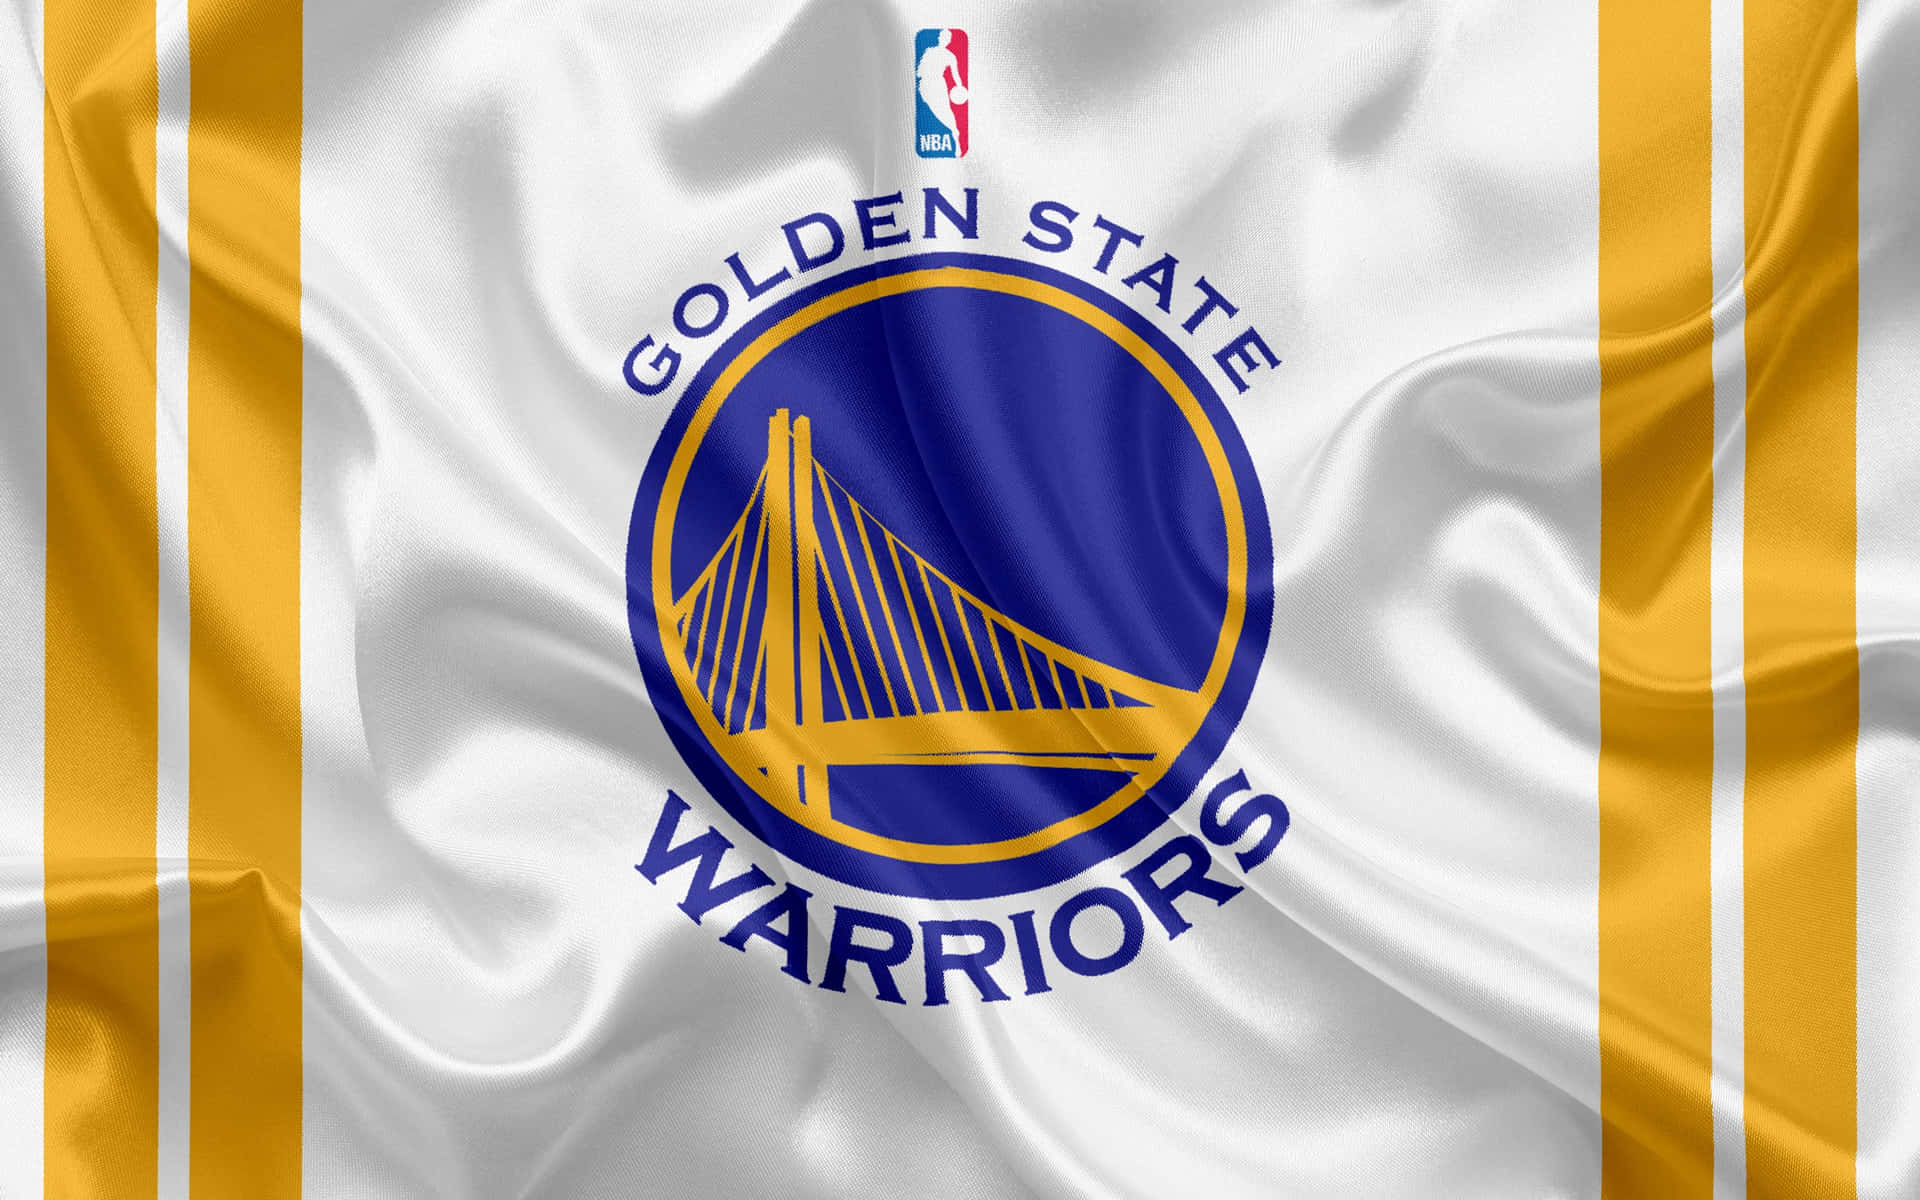 Wallpapers Golden State Warriors  NBA ID